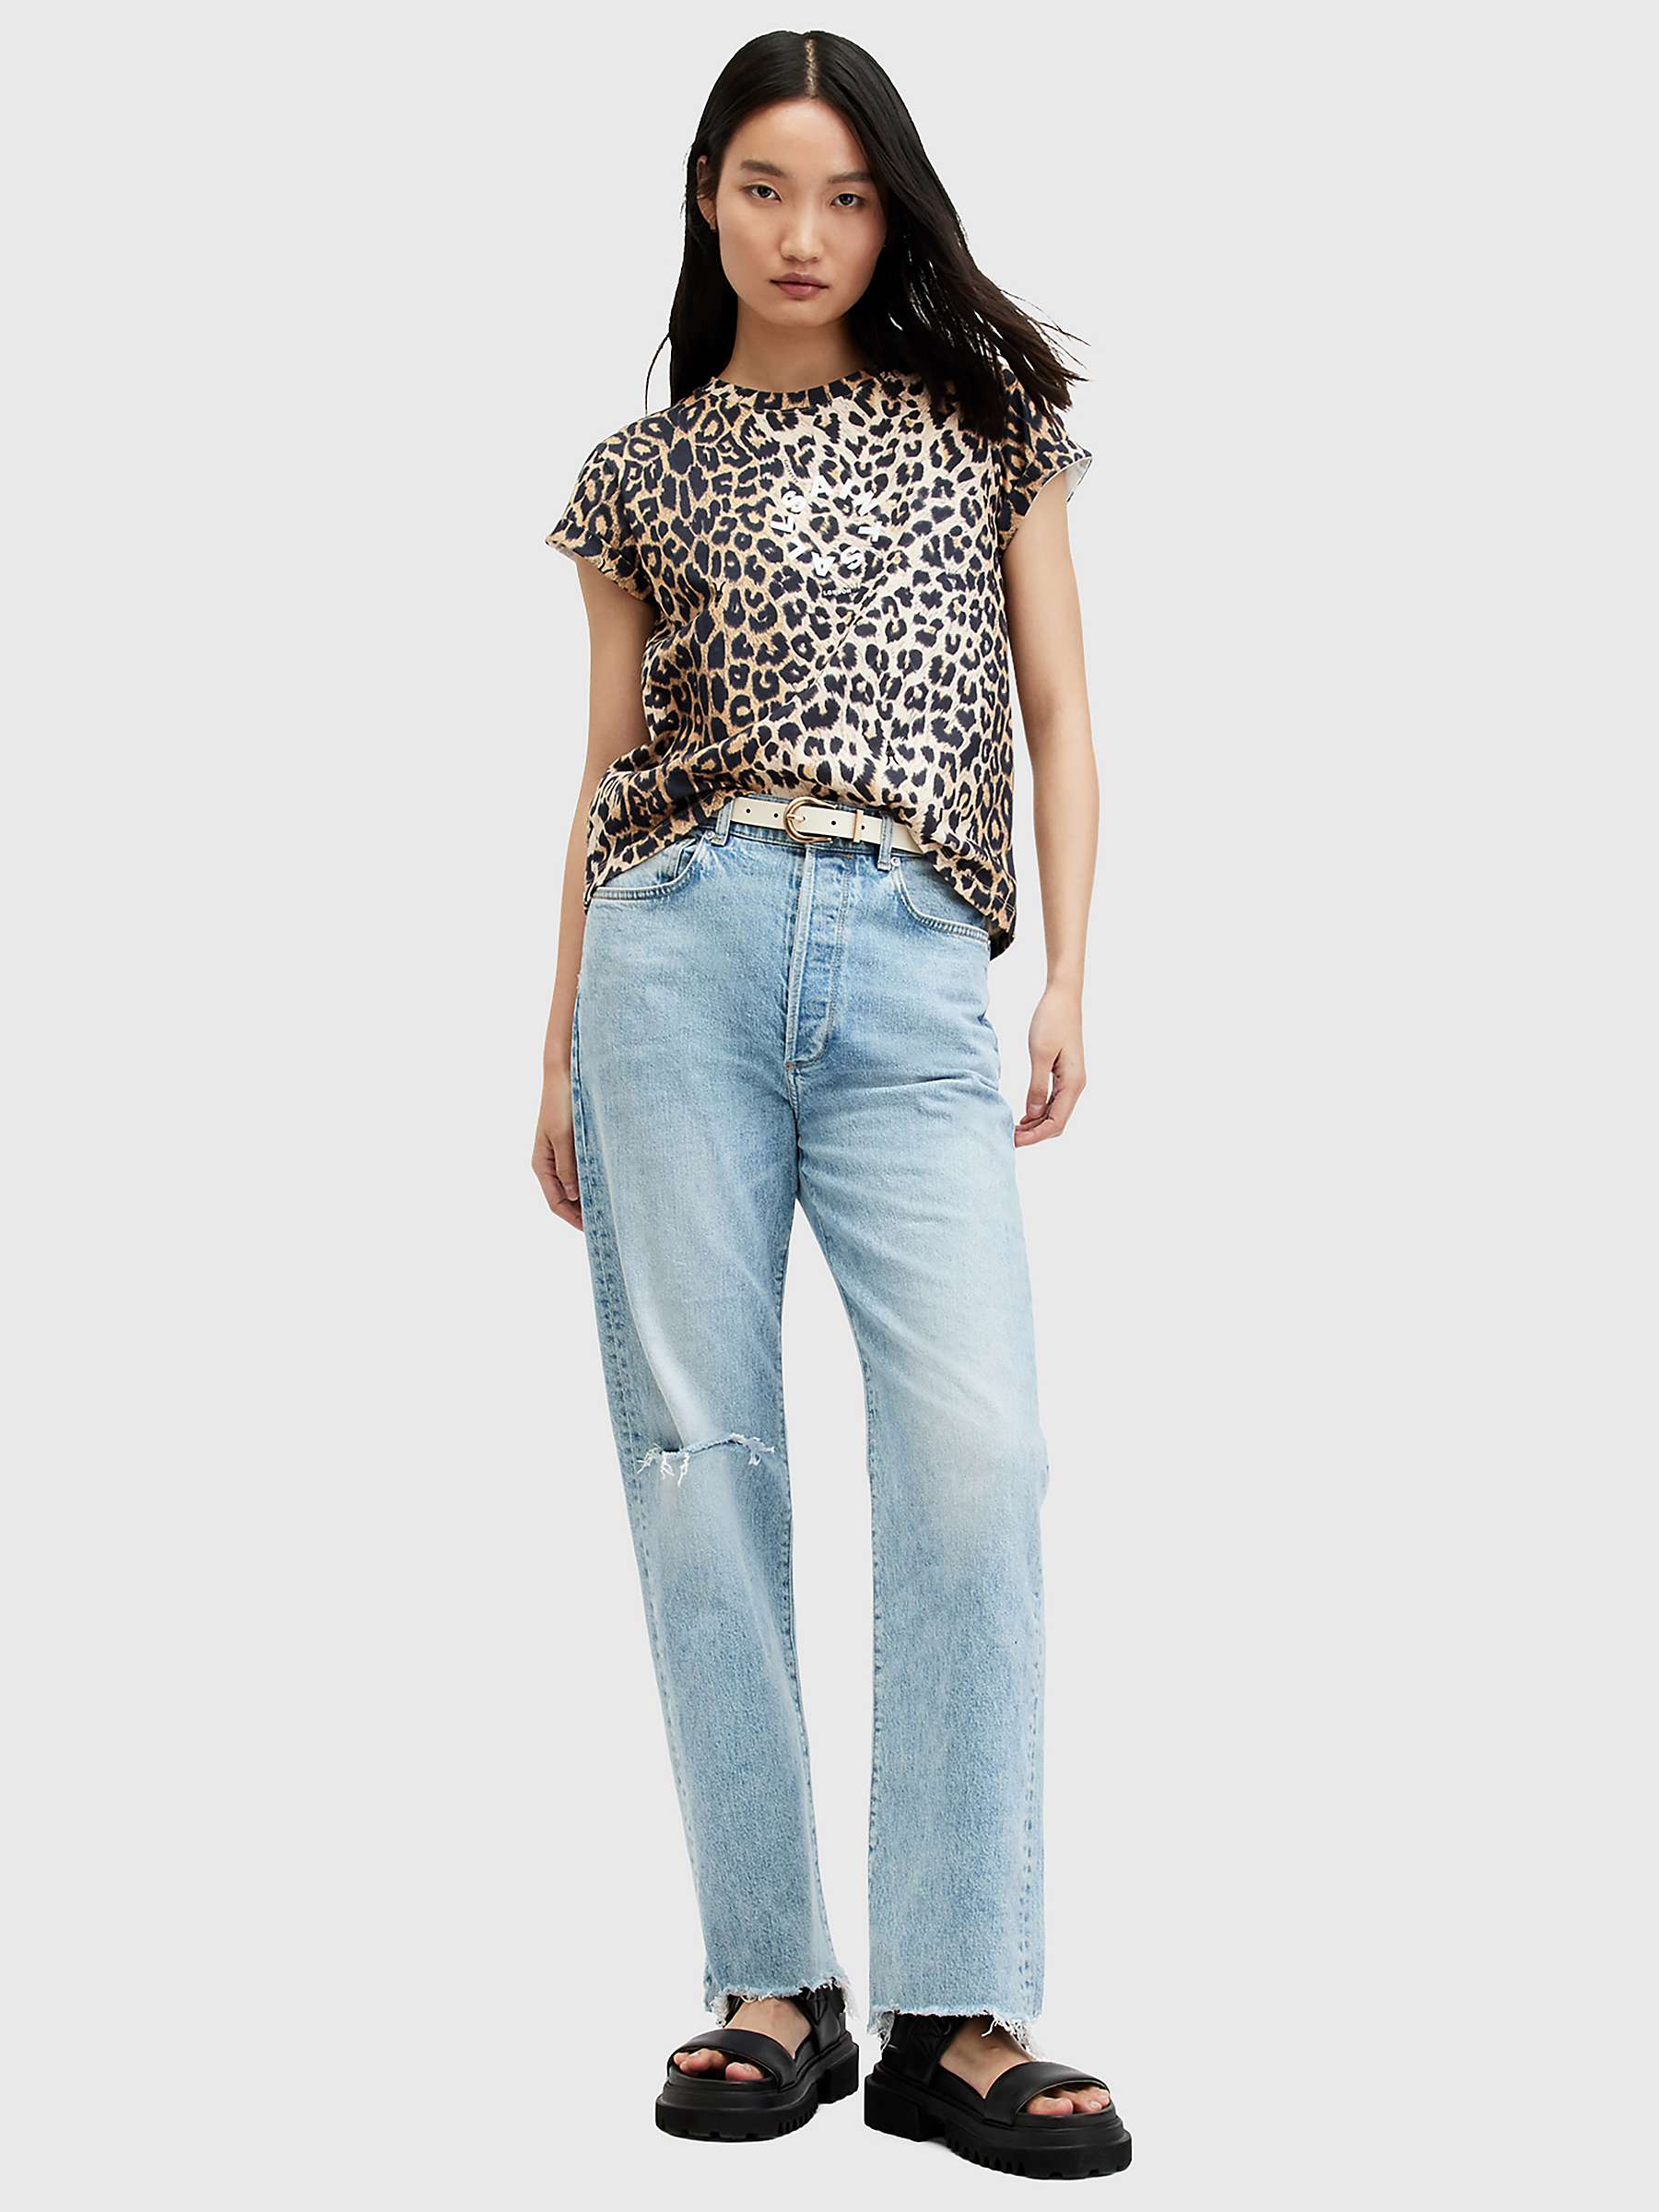 Buy AllSaints Tiepo Anna Cotton T-Shirt, Leopard Brown Online at johnlewis.com